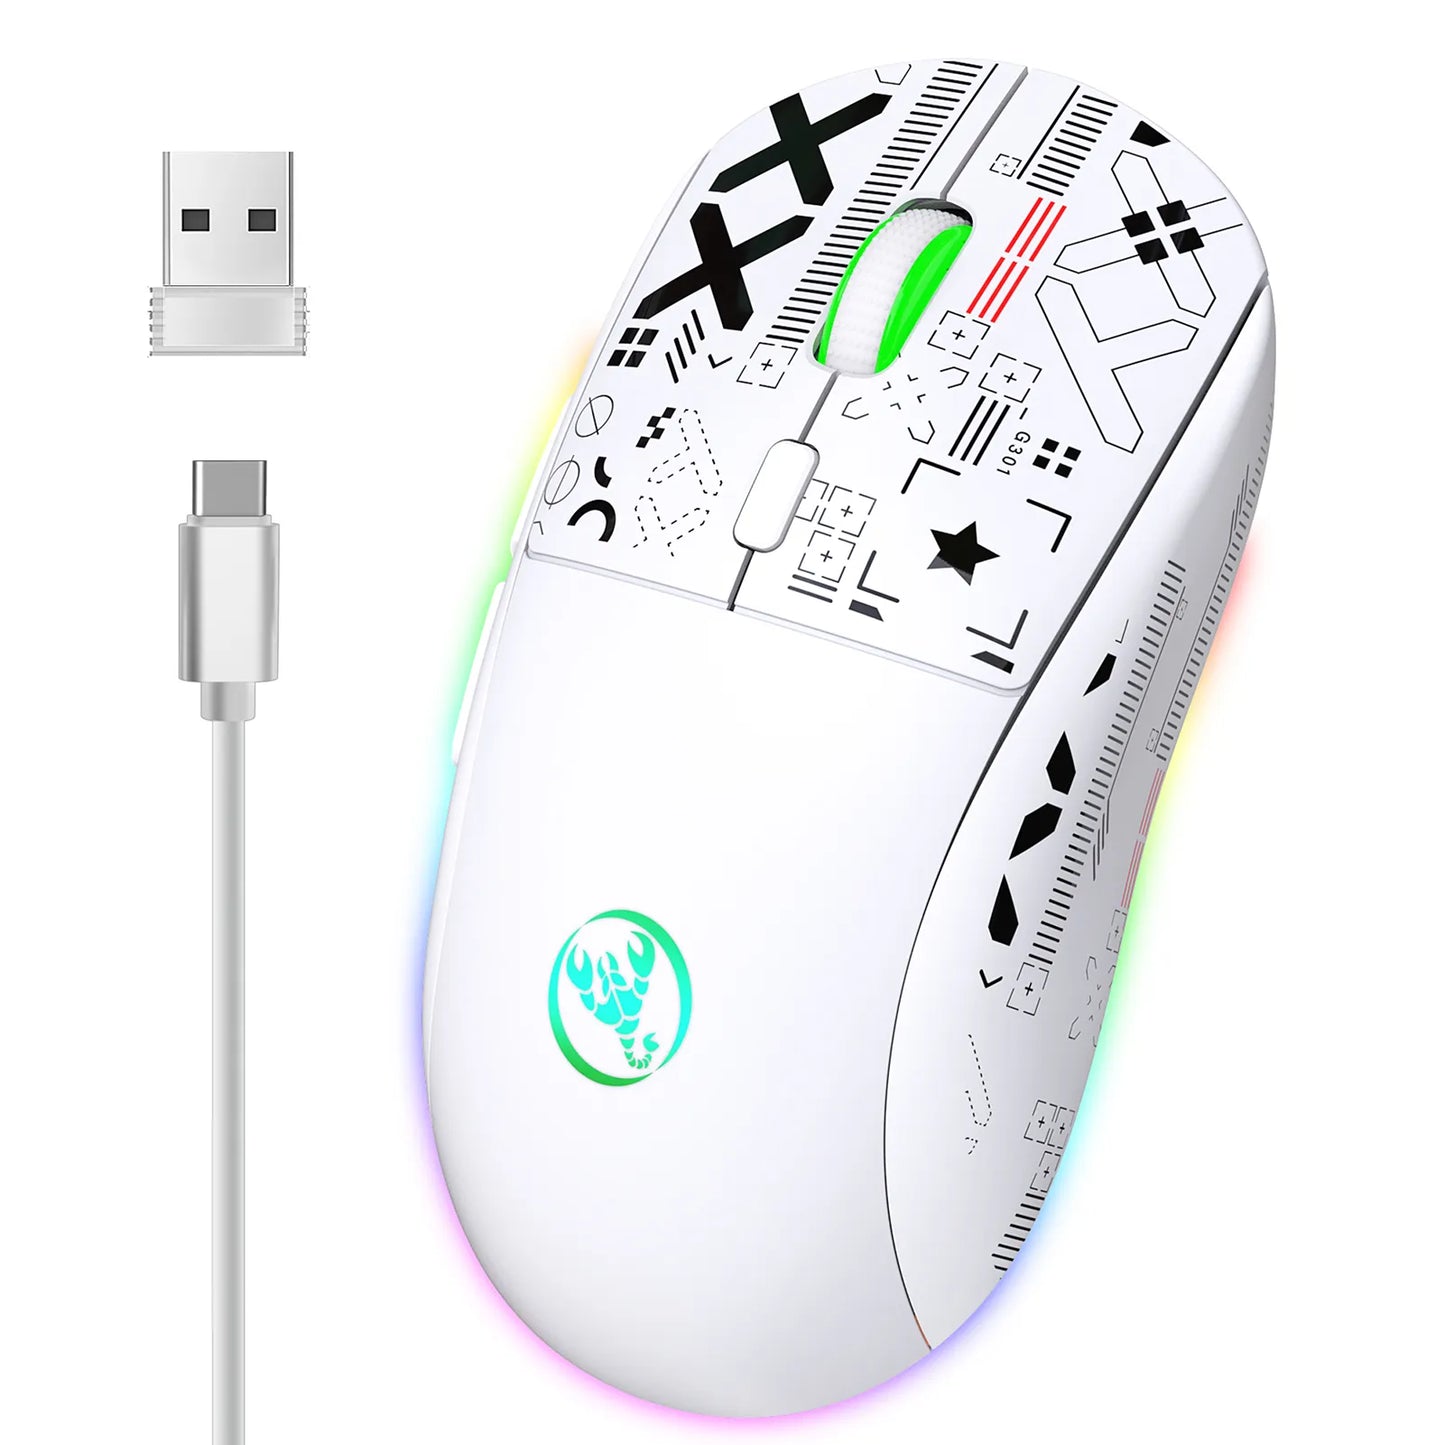 hxsj T90 2.4G Wireless Mechanical Mouse RGB Gaming Mouse Ergonomic 10 Million Keystroke 3600DPI Mouse 11 RGB Lighting Modes Mice